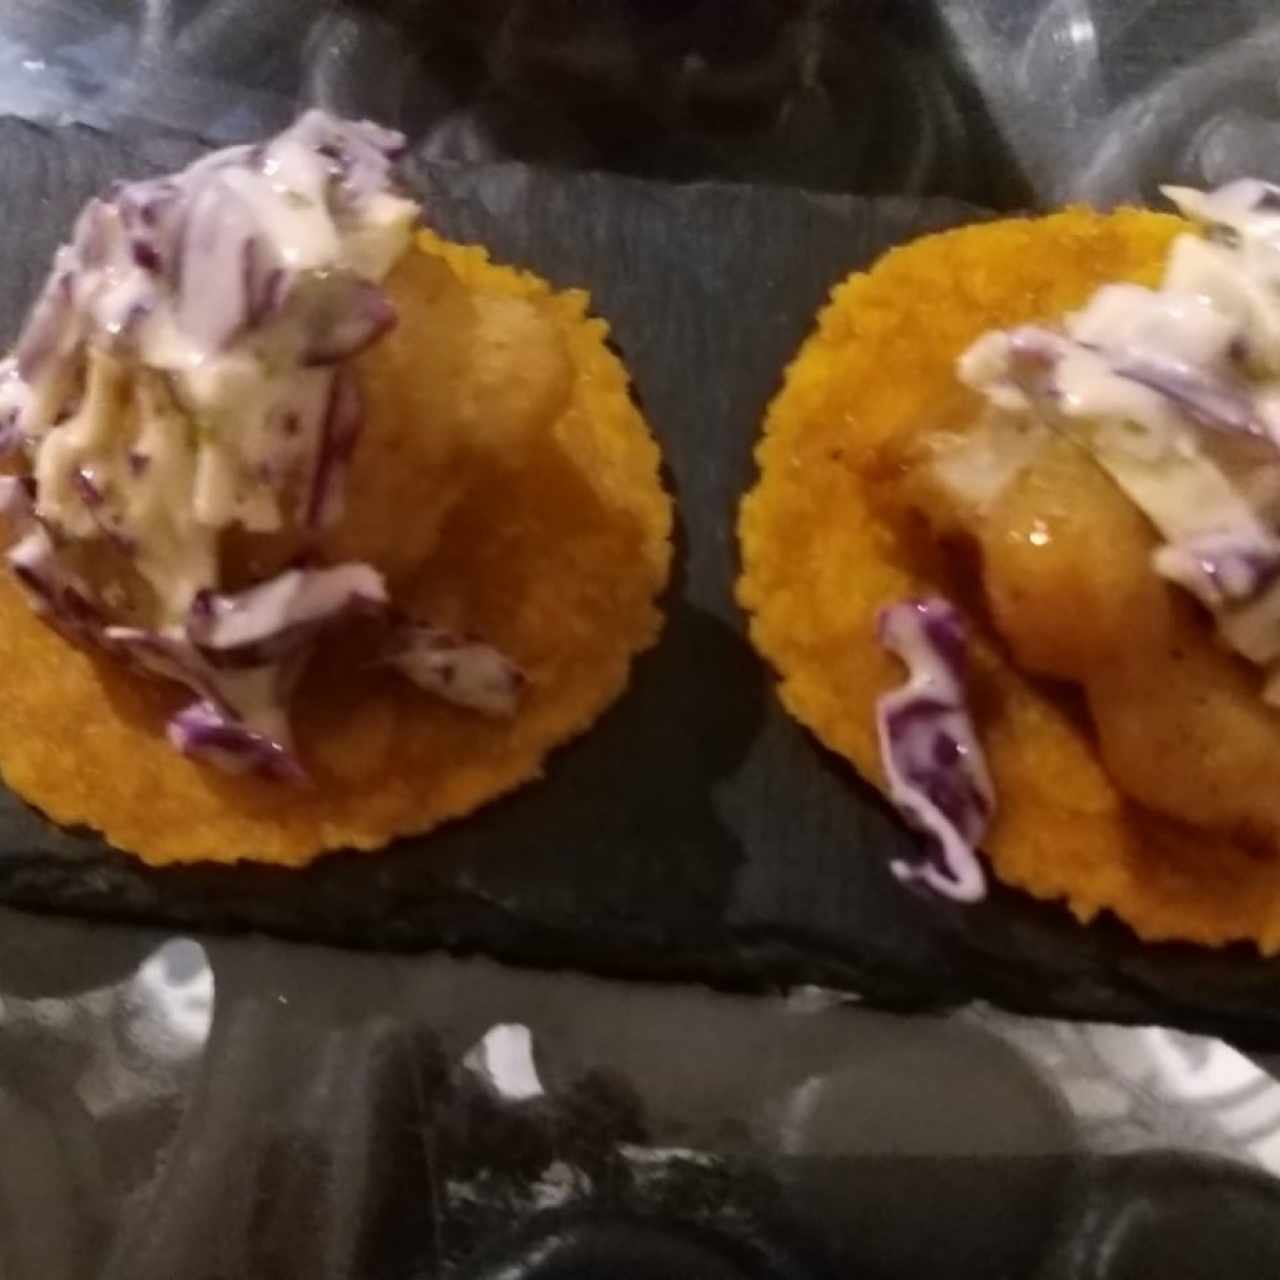 Para Compartir - Fish Tacos